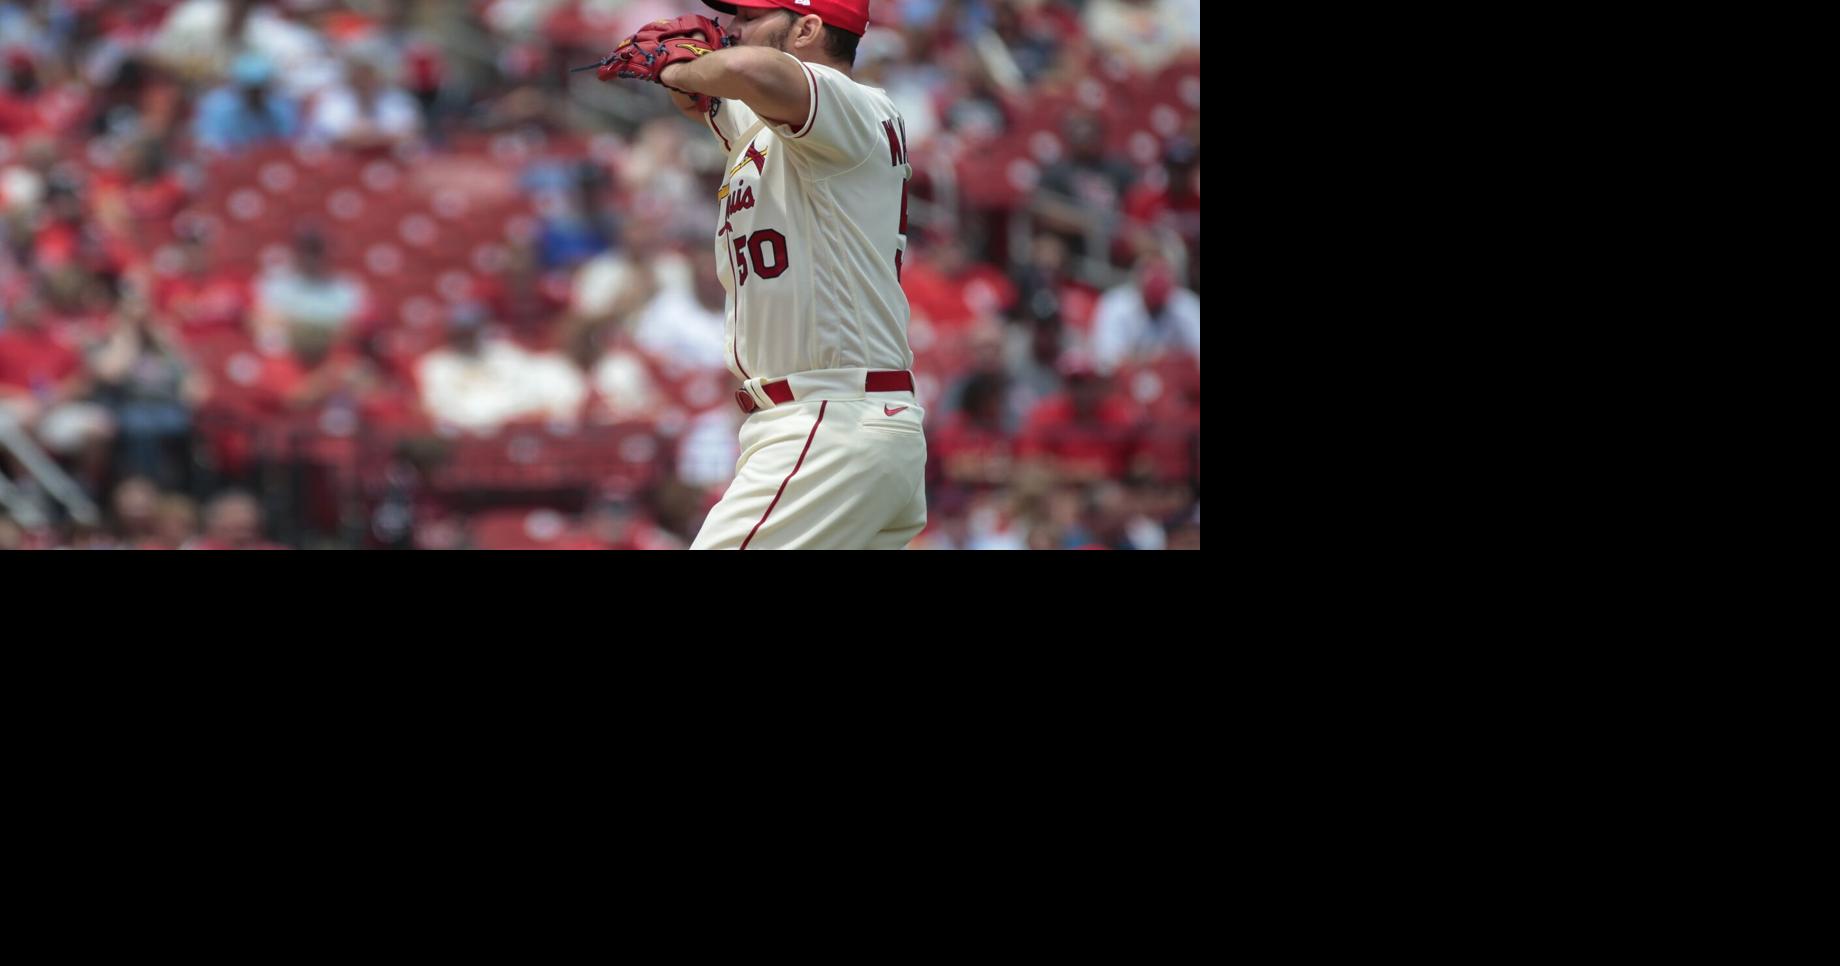 Adam Wainwright on Cardinals' skid - 'More urgency wouldn't hurt